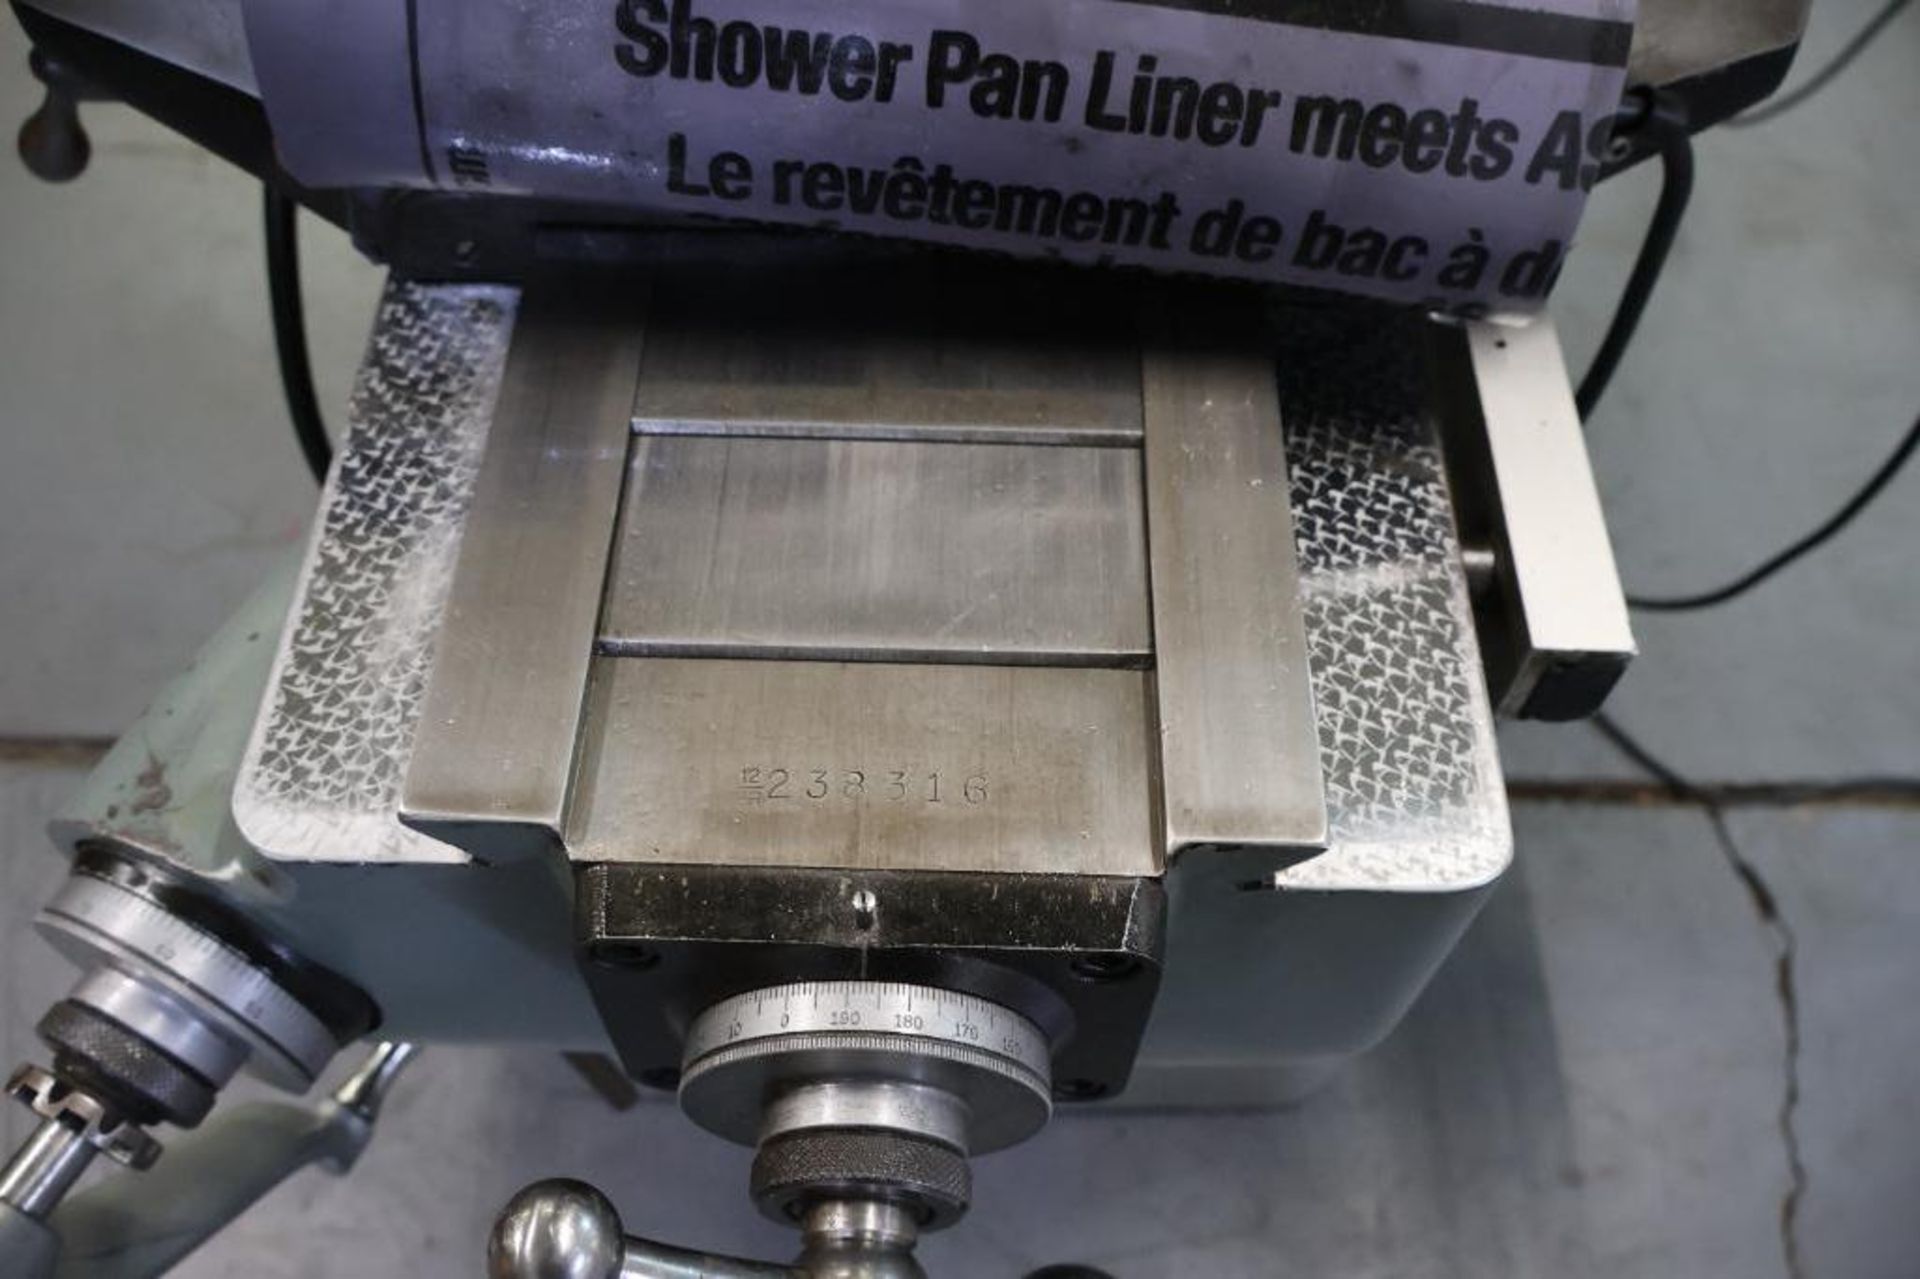 Bridgeport vertical milling machine w/ DRO, power feed - Image 5 of 18